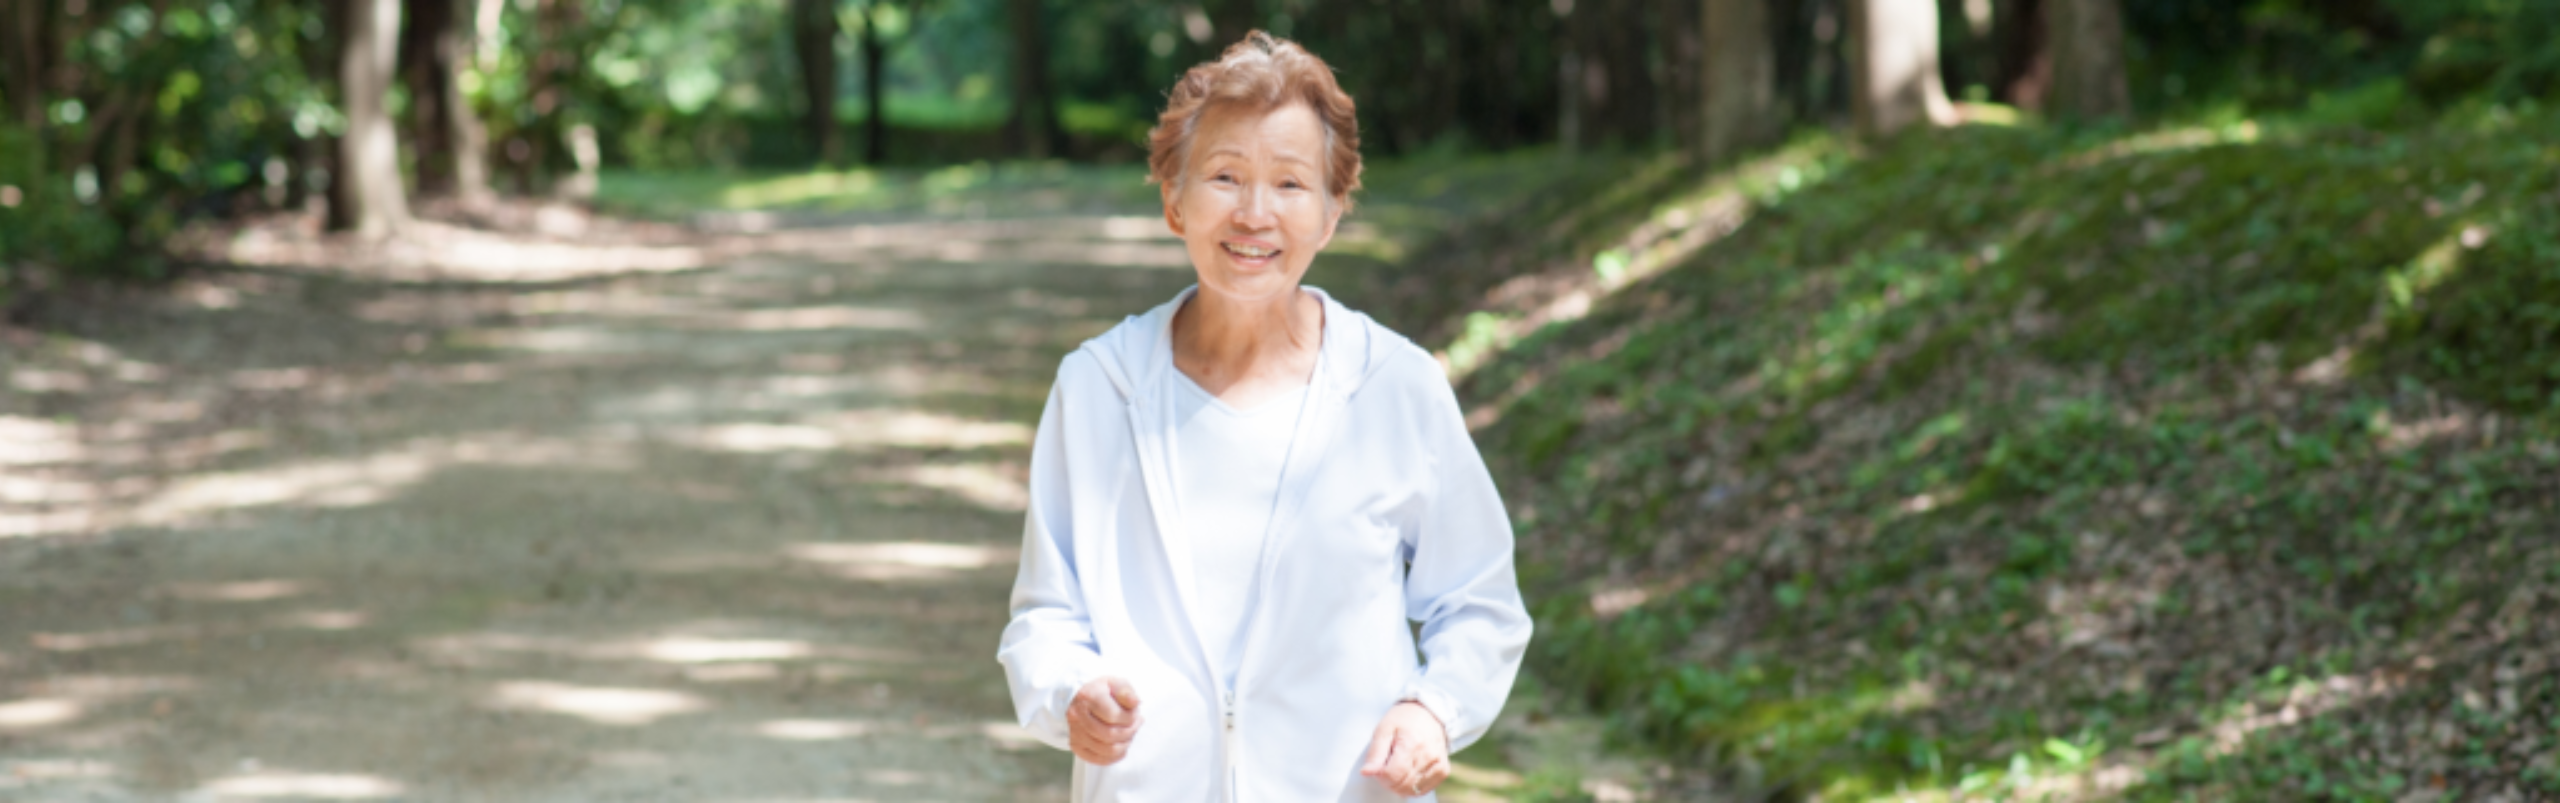 Senior Asian woman on a walking trail outside